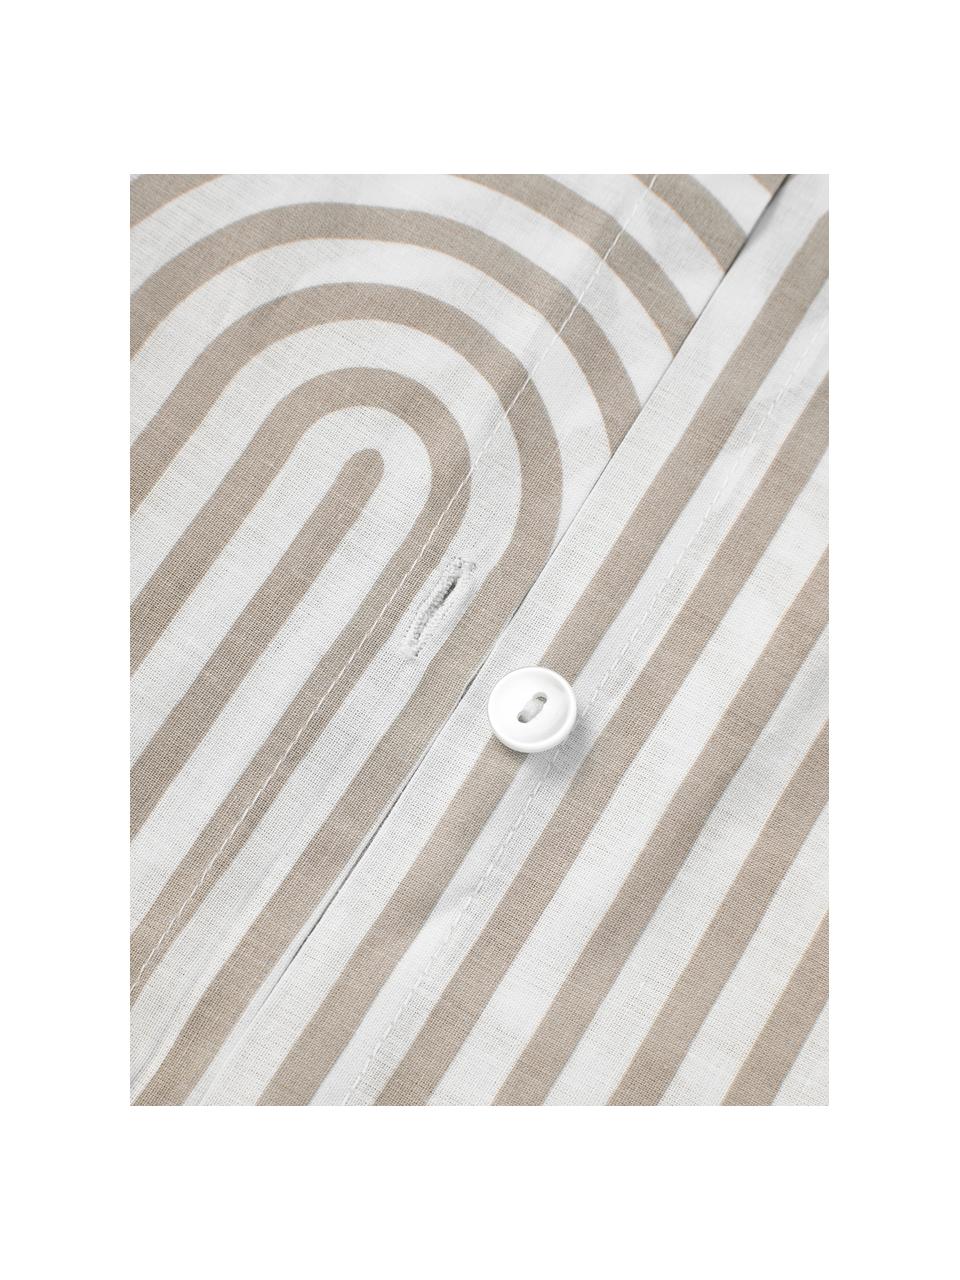 Baumwoll-Kopfkissenbezug Arcs, Webart: Renforcé Fadendichte 144 , Beige, Weiß, B 40 x L 80 cm